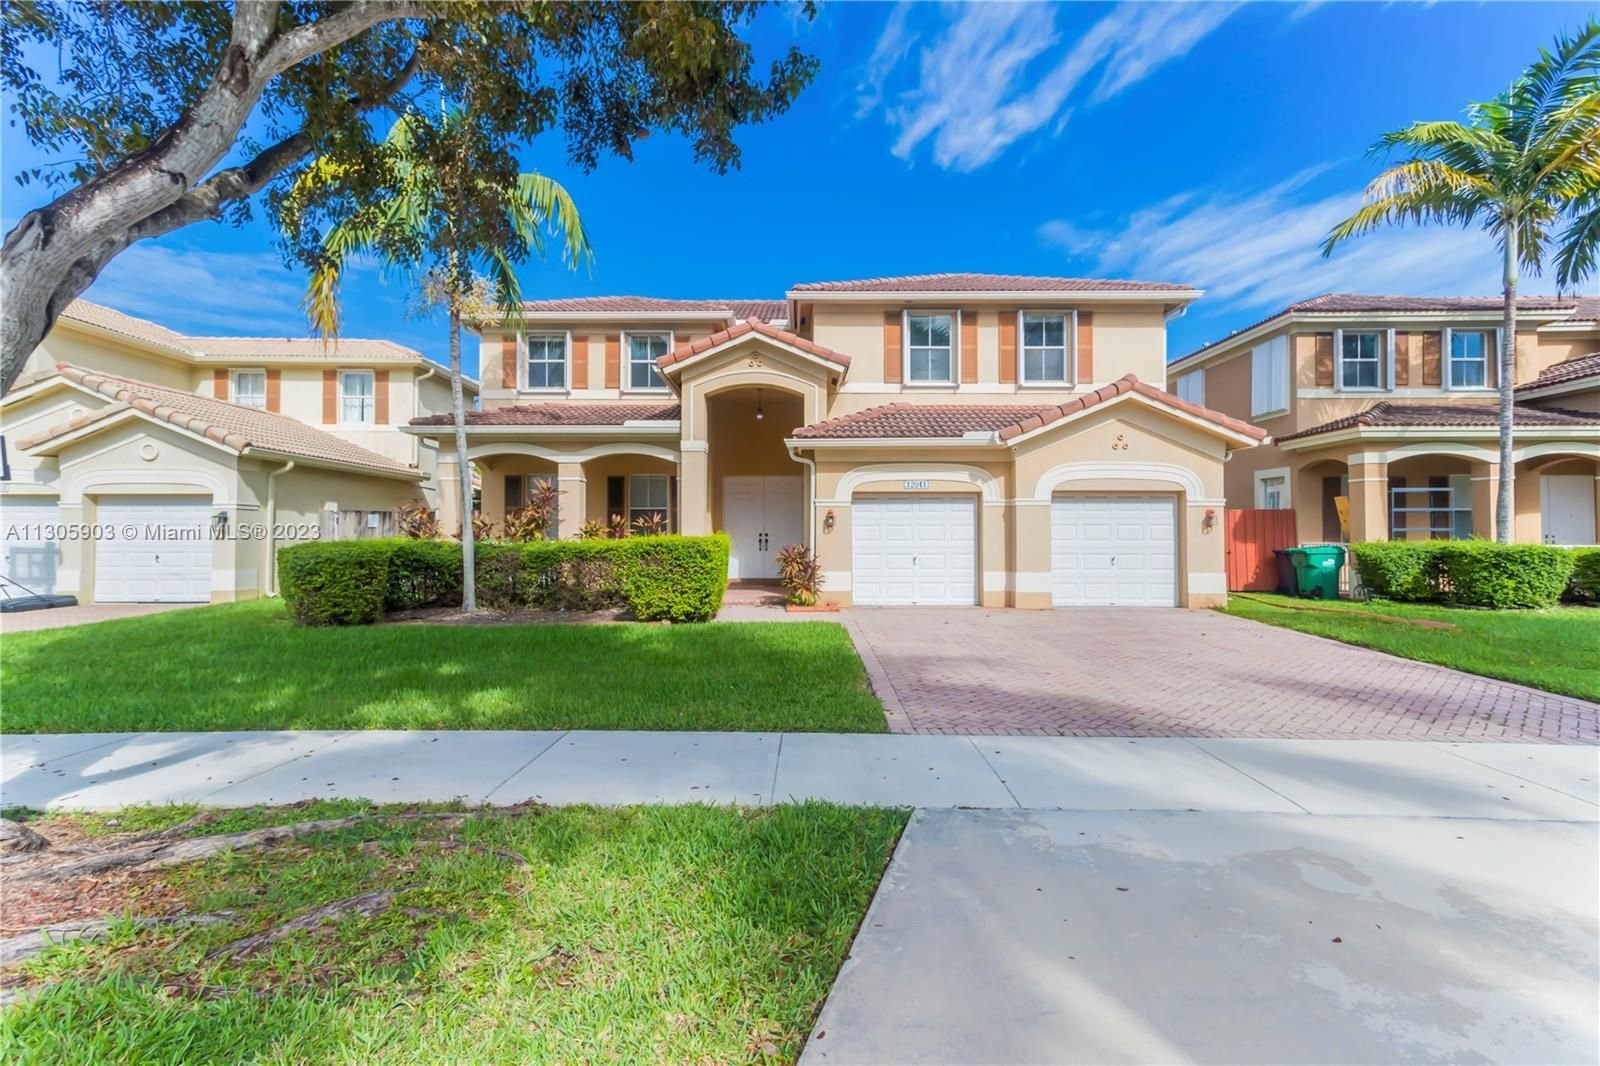 Real estate property located at 12041 126th Ter, Miami-Dade County, Miami, FL